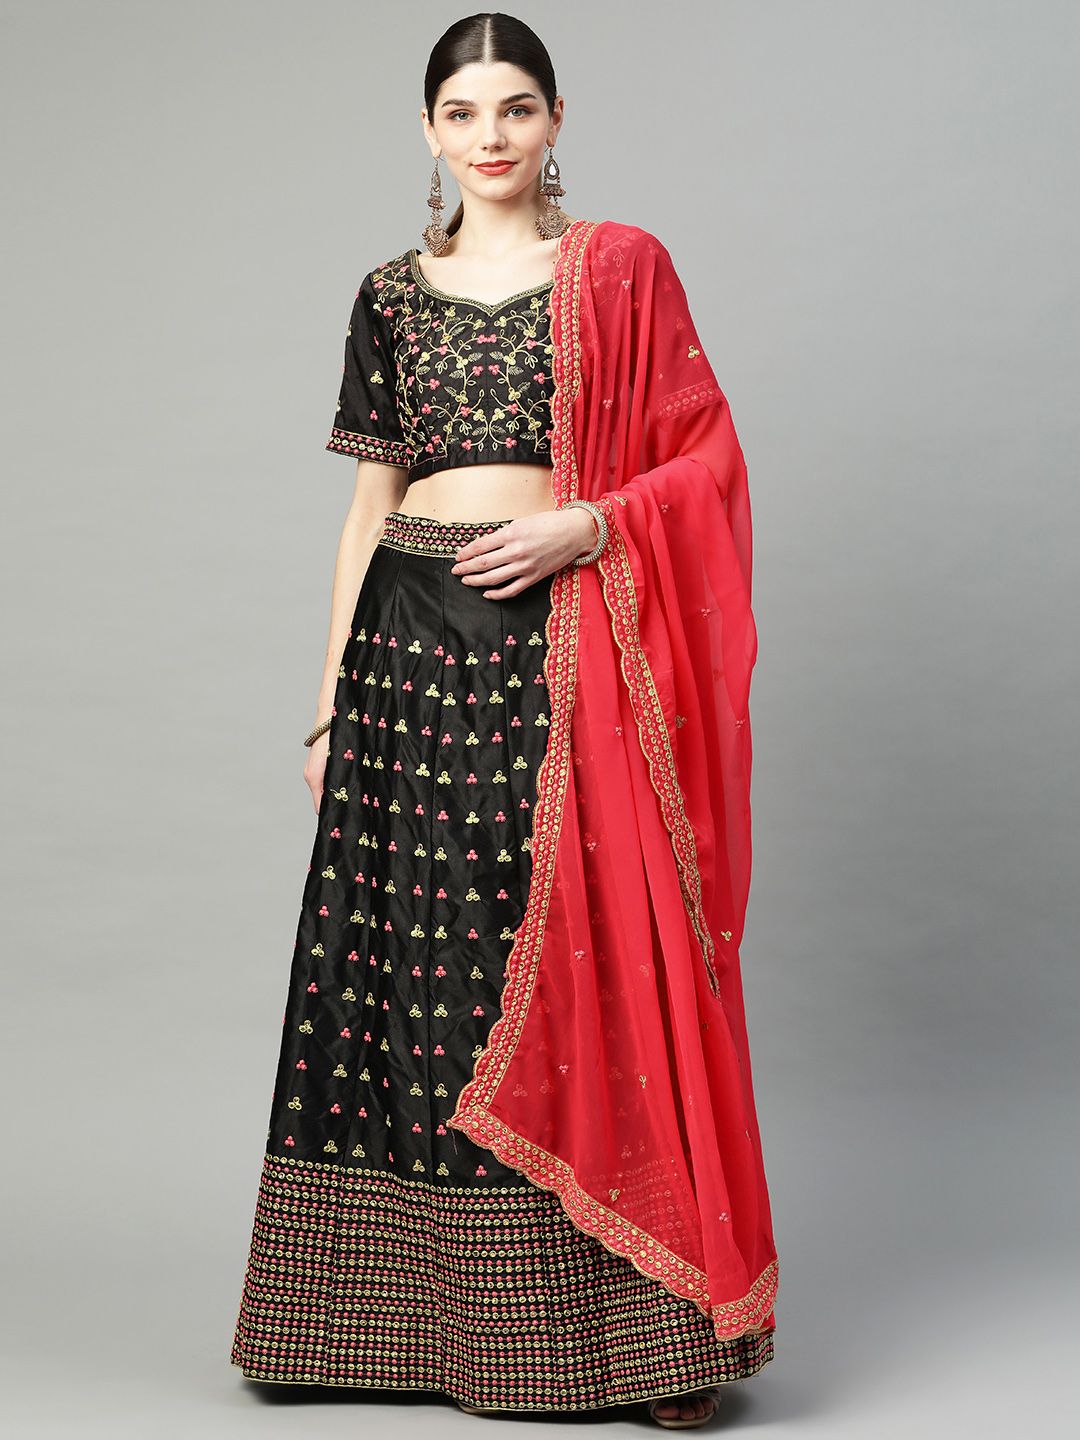 Readiprint Fashions Black Semi-Stitched Lehenga & Unstitched Blouse with Dupatta Price in India